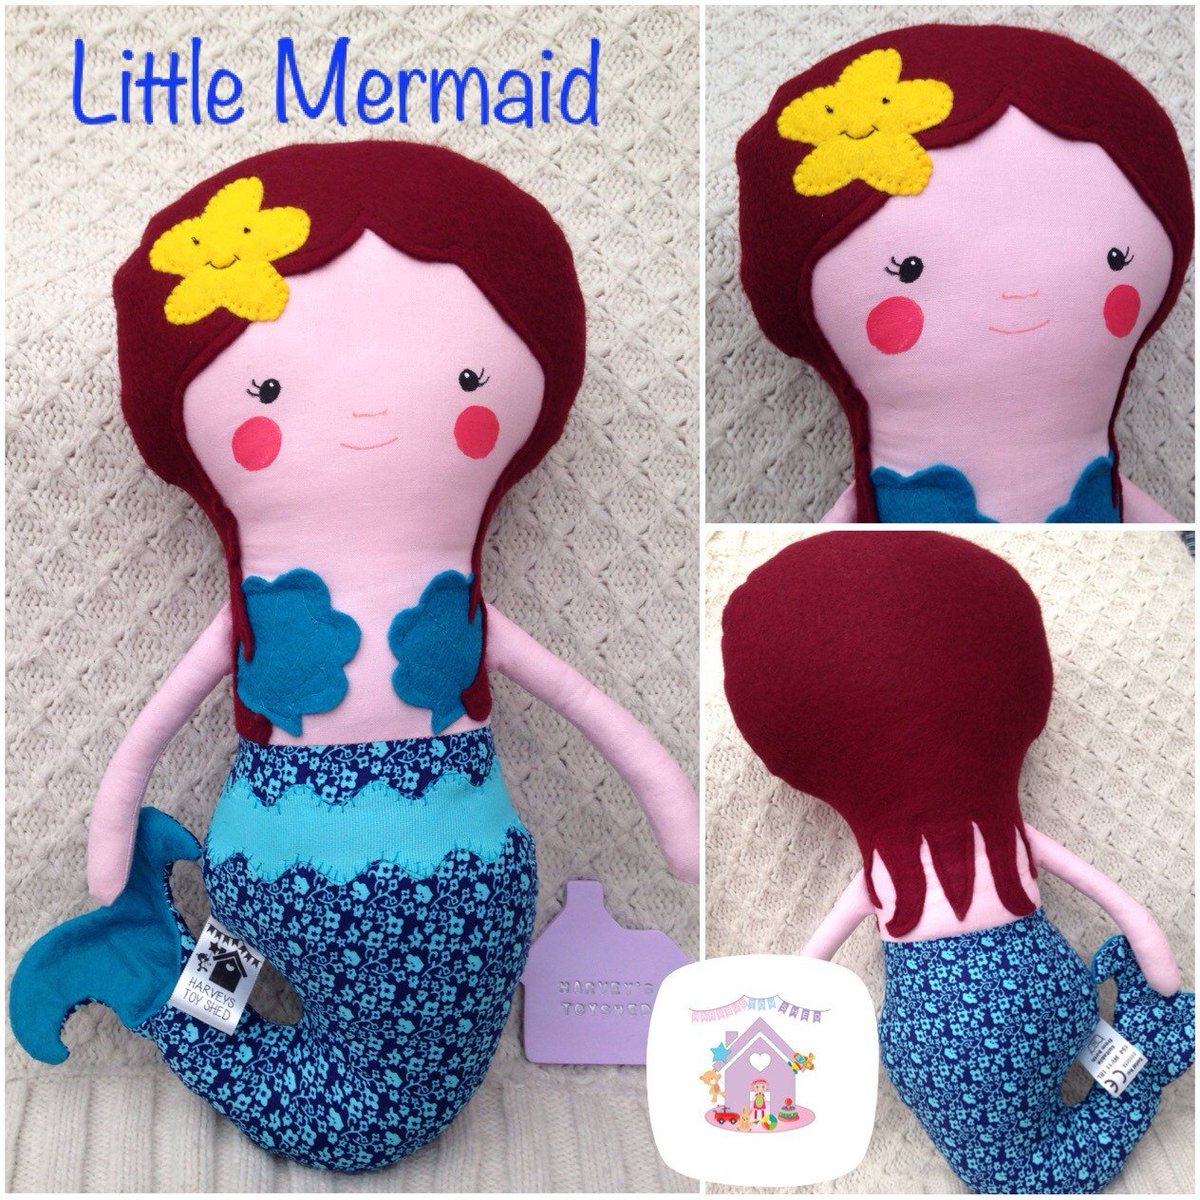 Mermaid Soft Toy Doll Handmade To Order Themed Soft Toy tuppu.net/a68295a2 #HarveysToyShed #Etsy #MermaidDoll